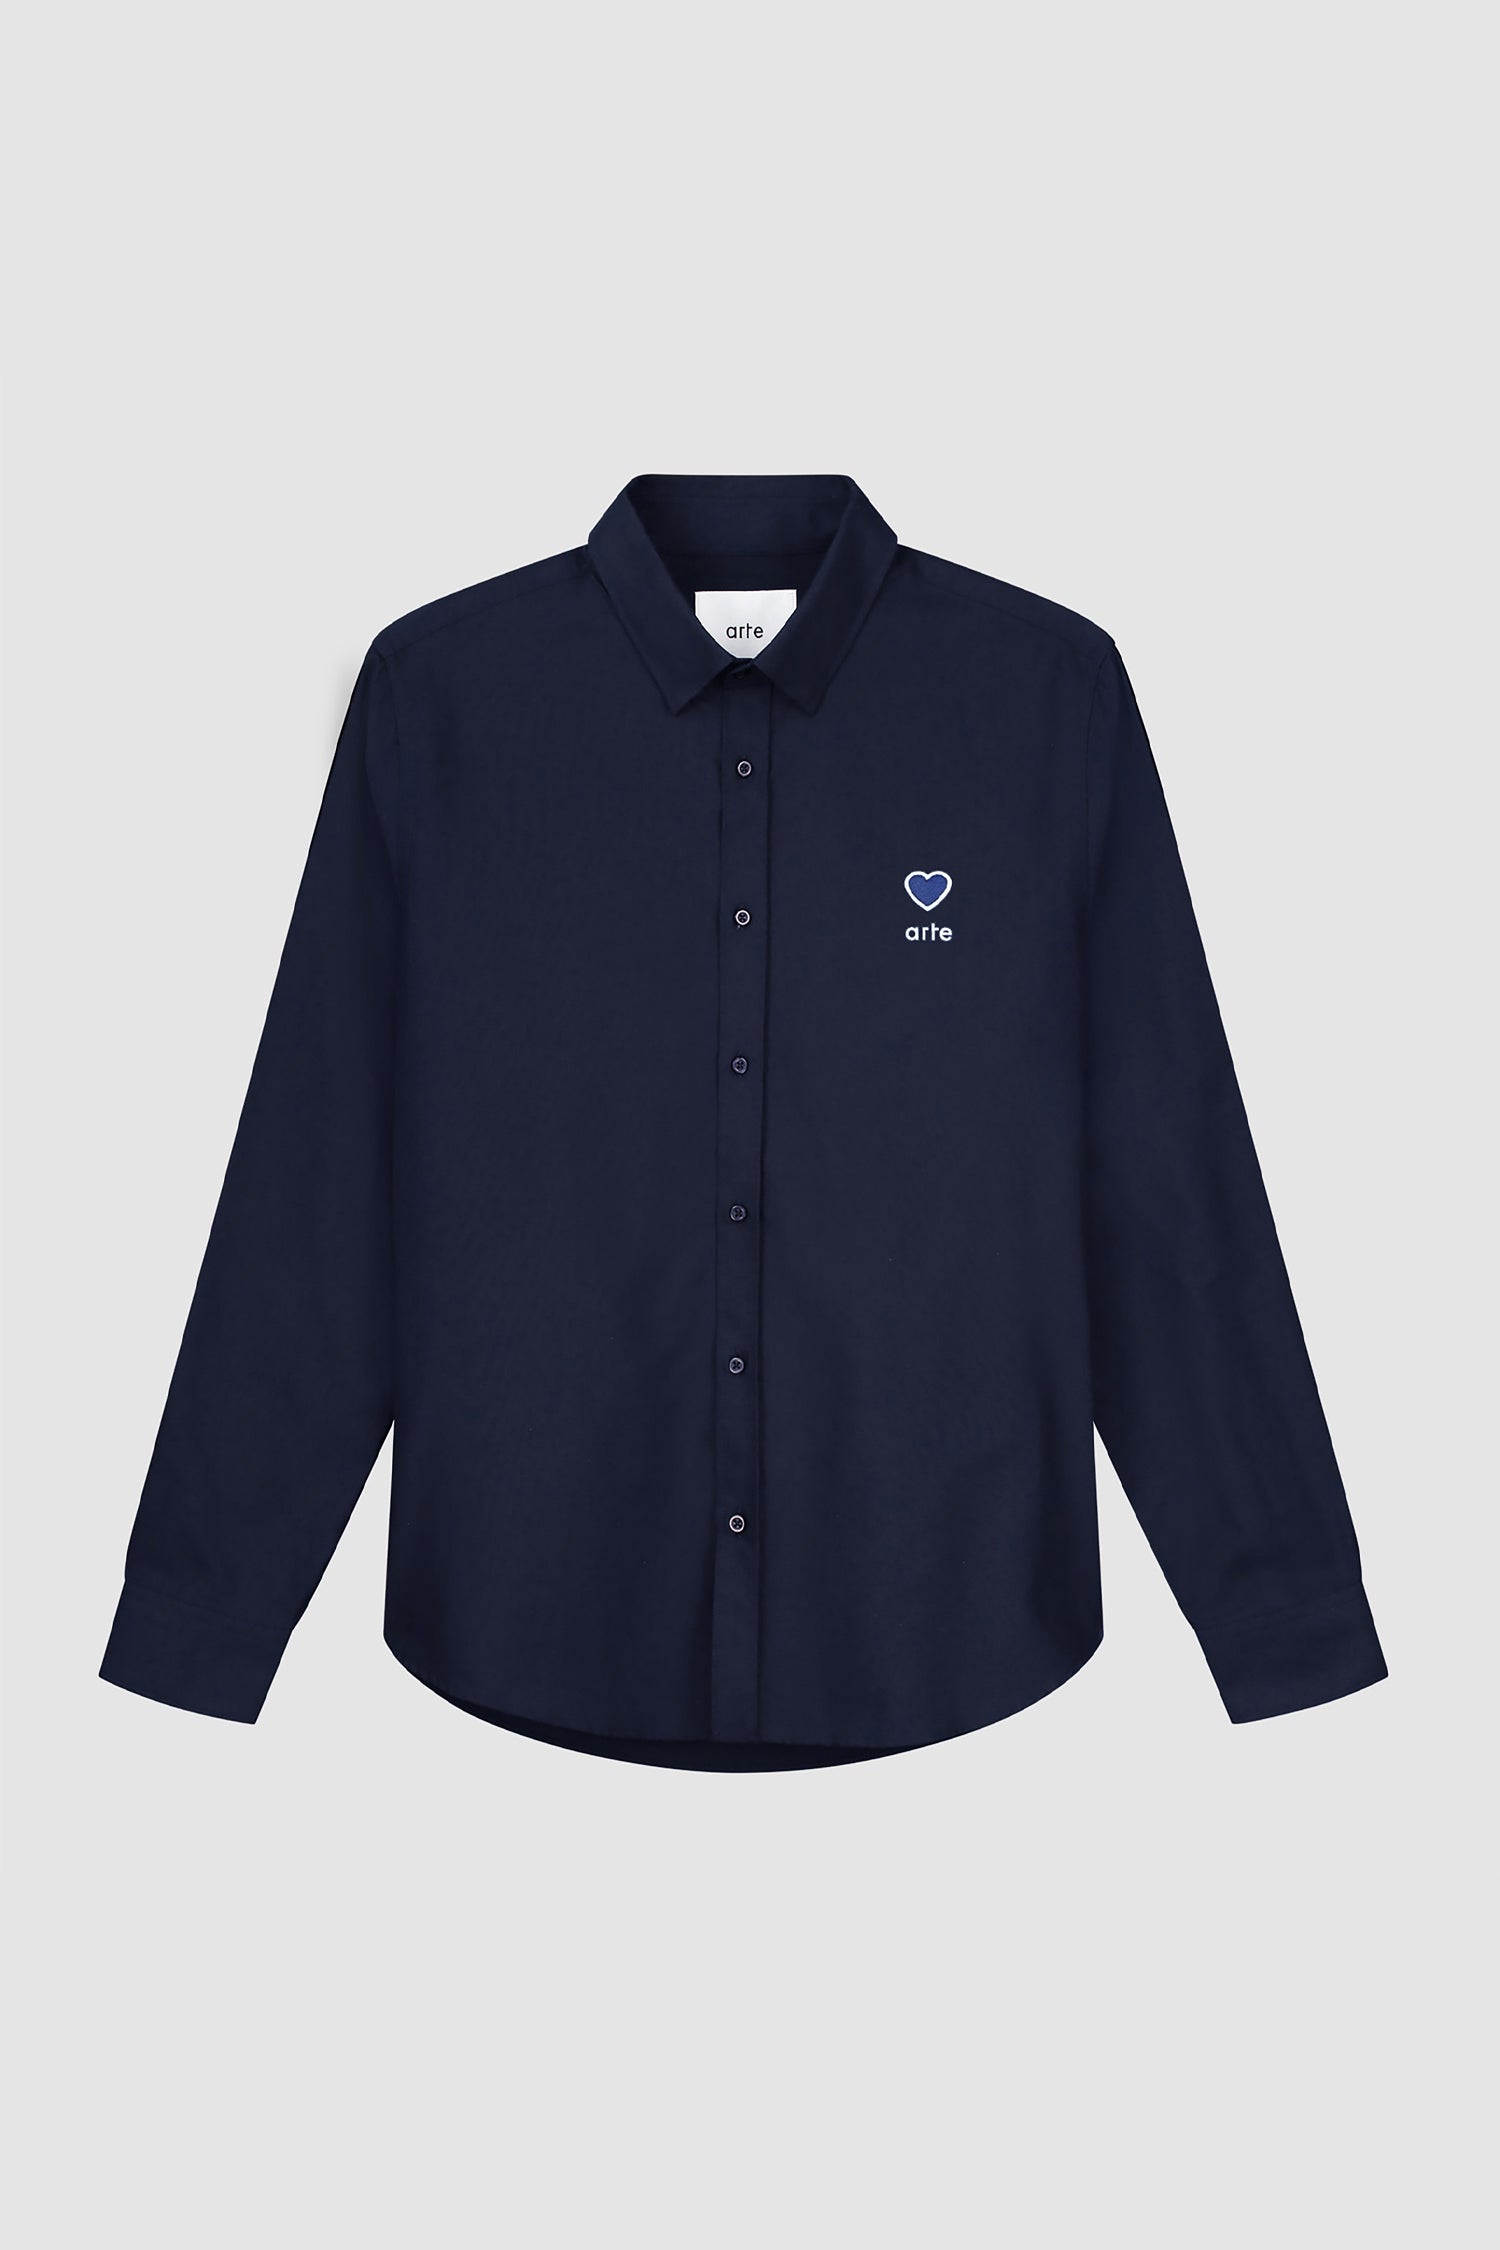 Stockton Heart Patch Shirt - Navy